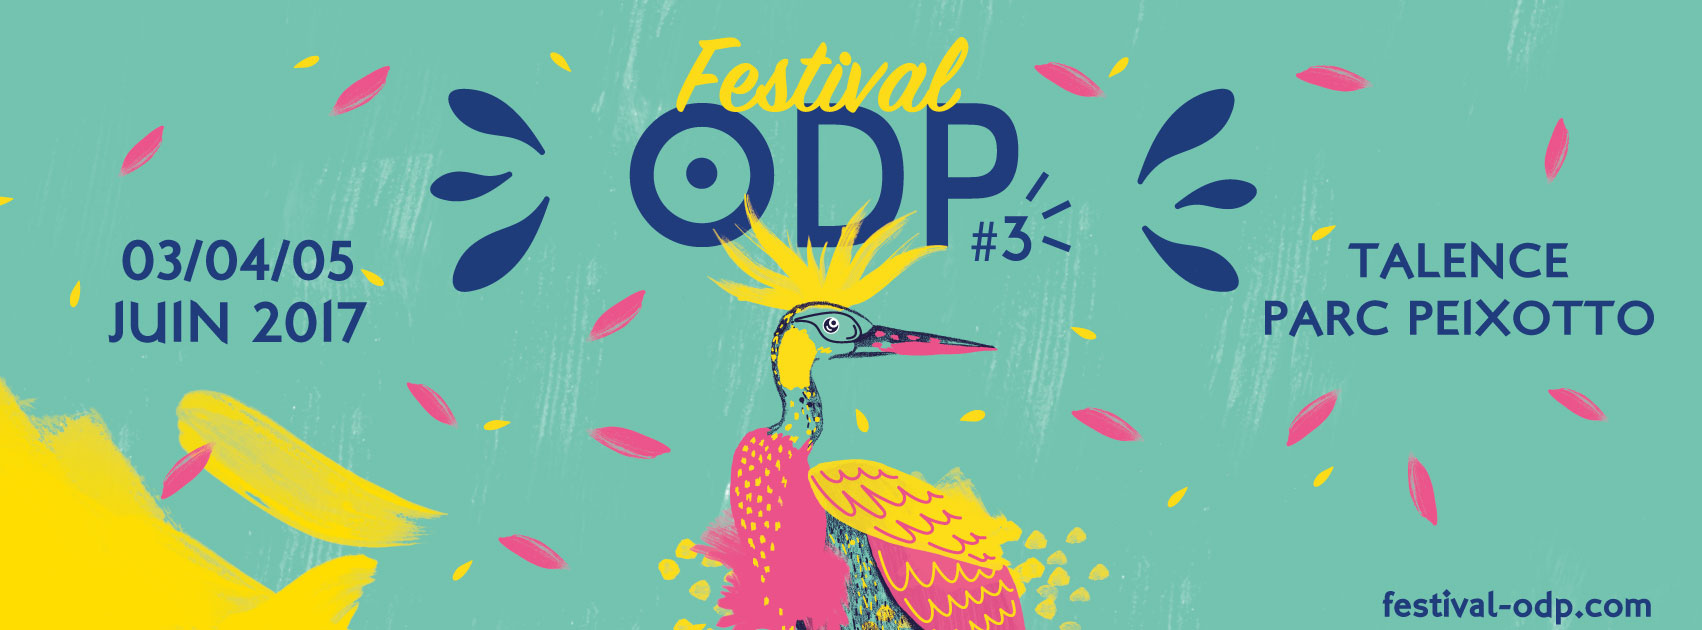 odp-festival-bordeaux